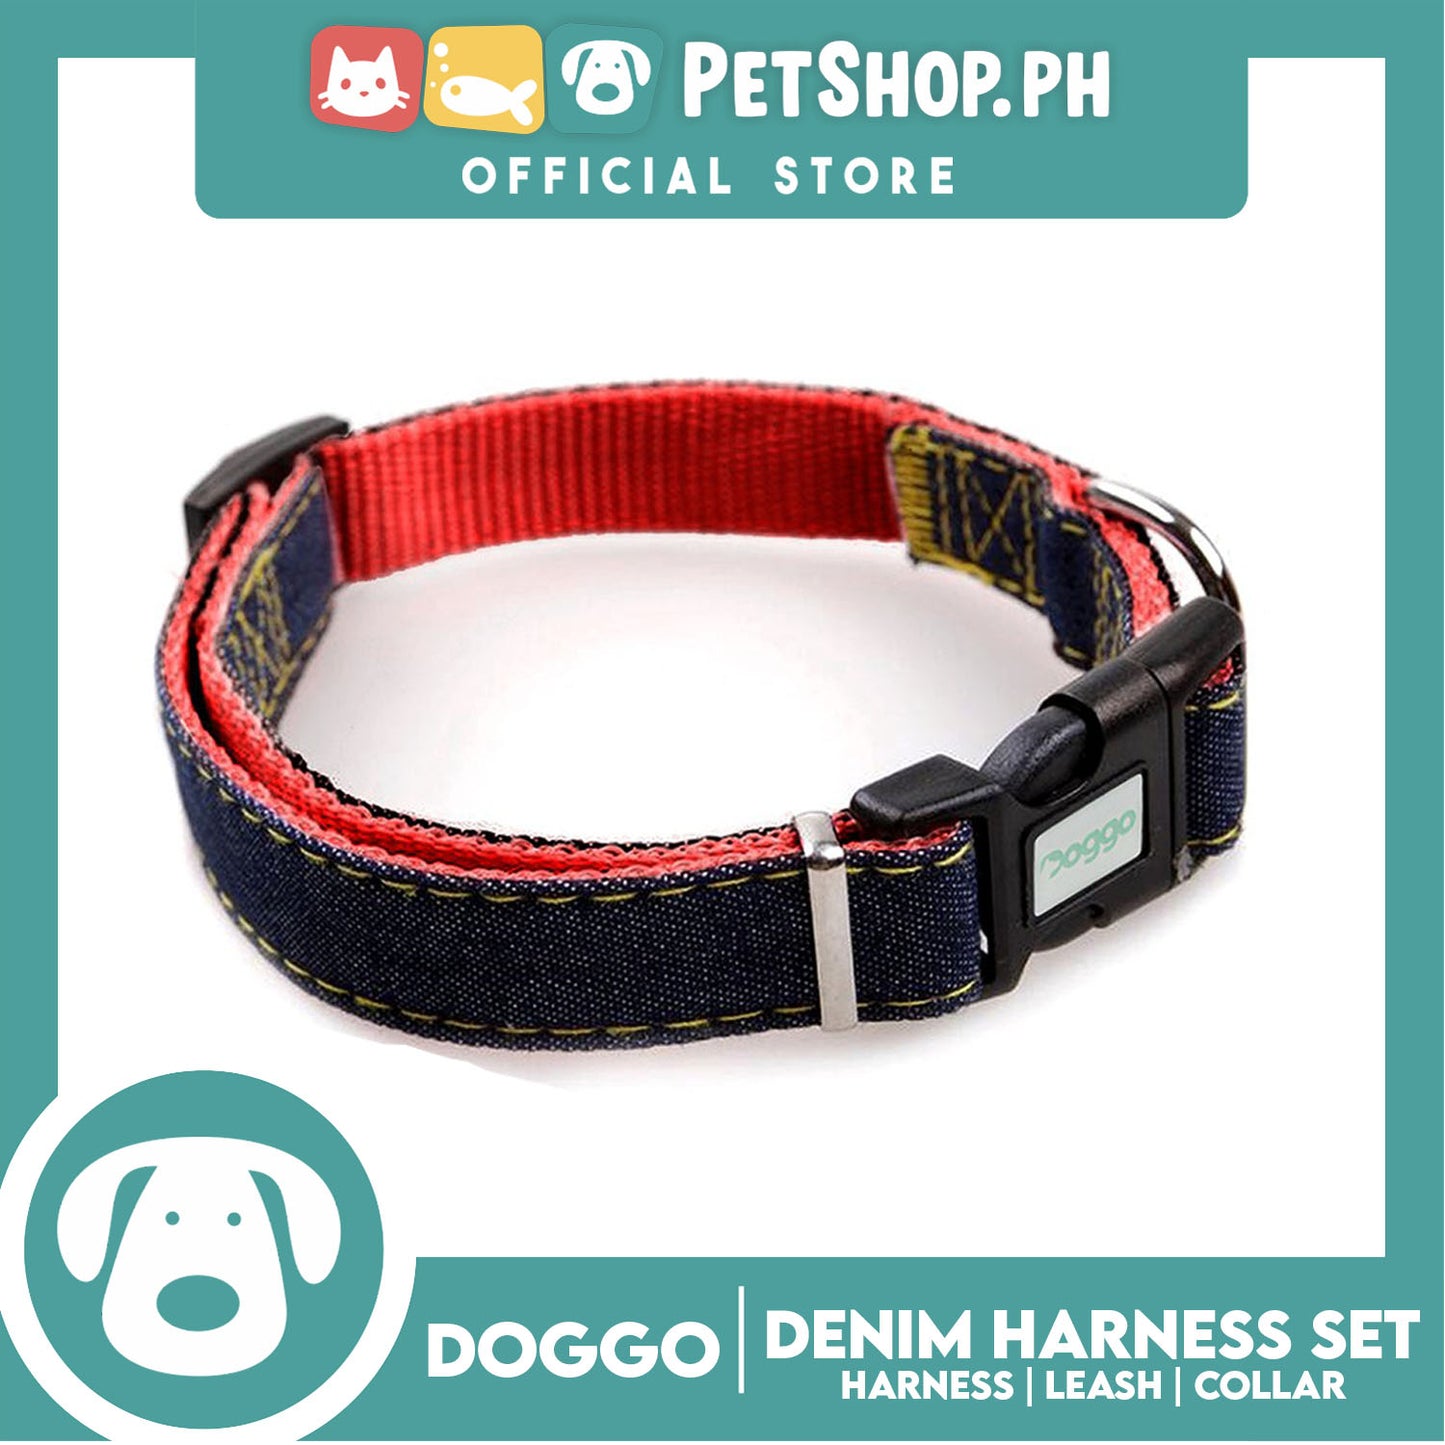 Doggo Strong Harness Set Denim Design Medium (Blue) Harness, Leash and Collar for Your Dog